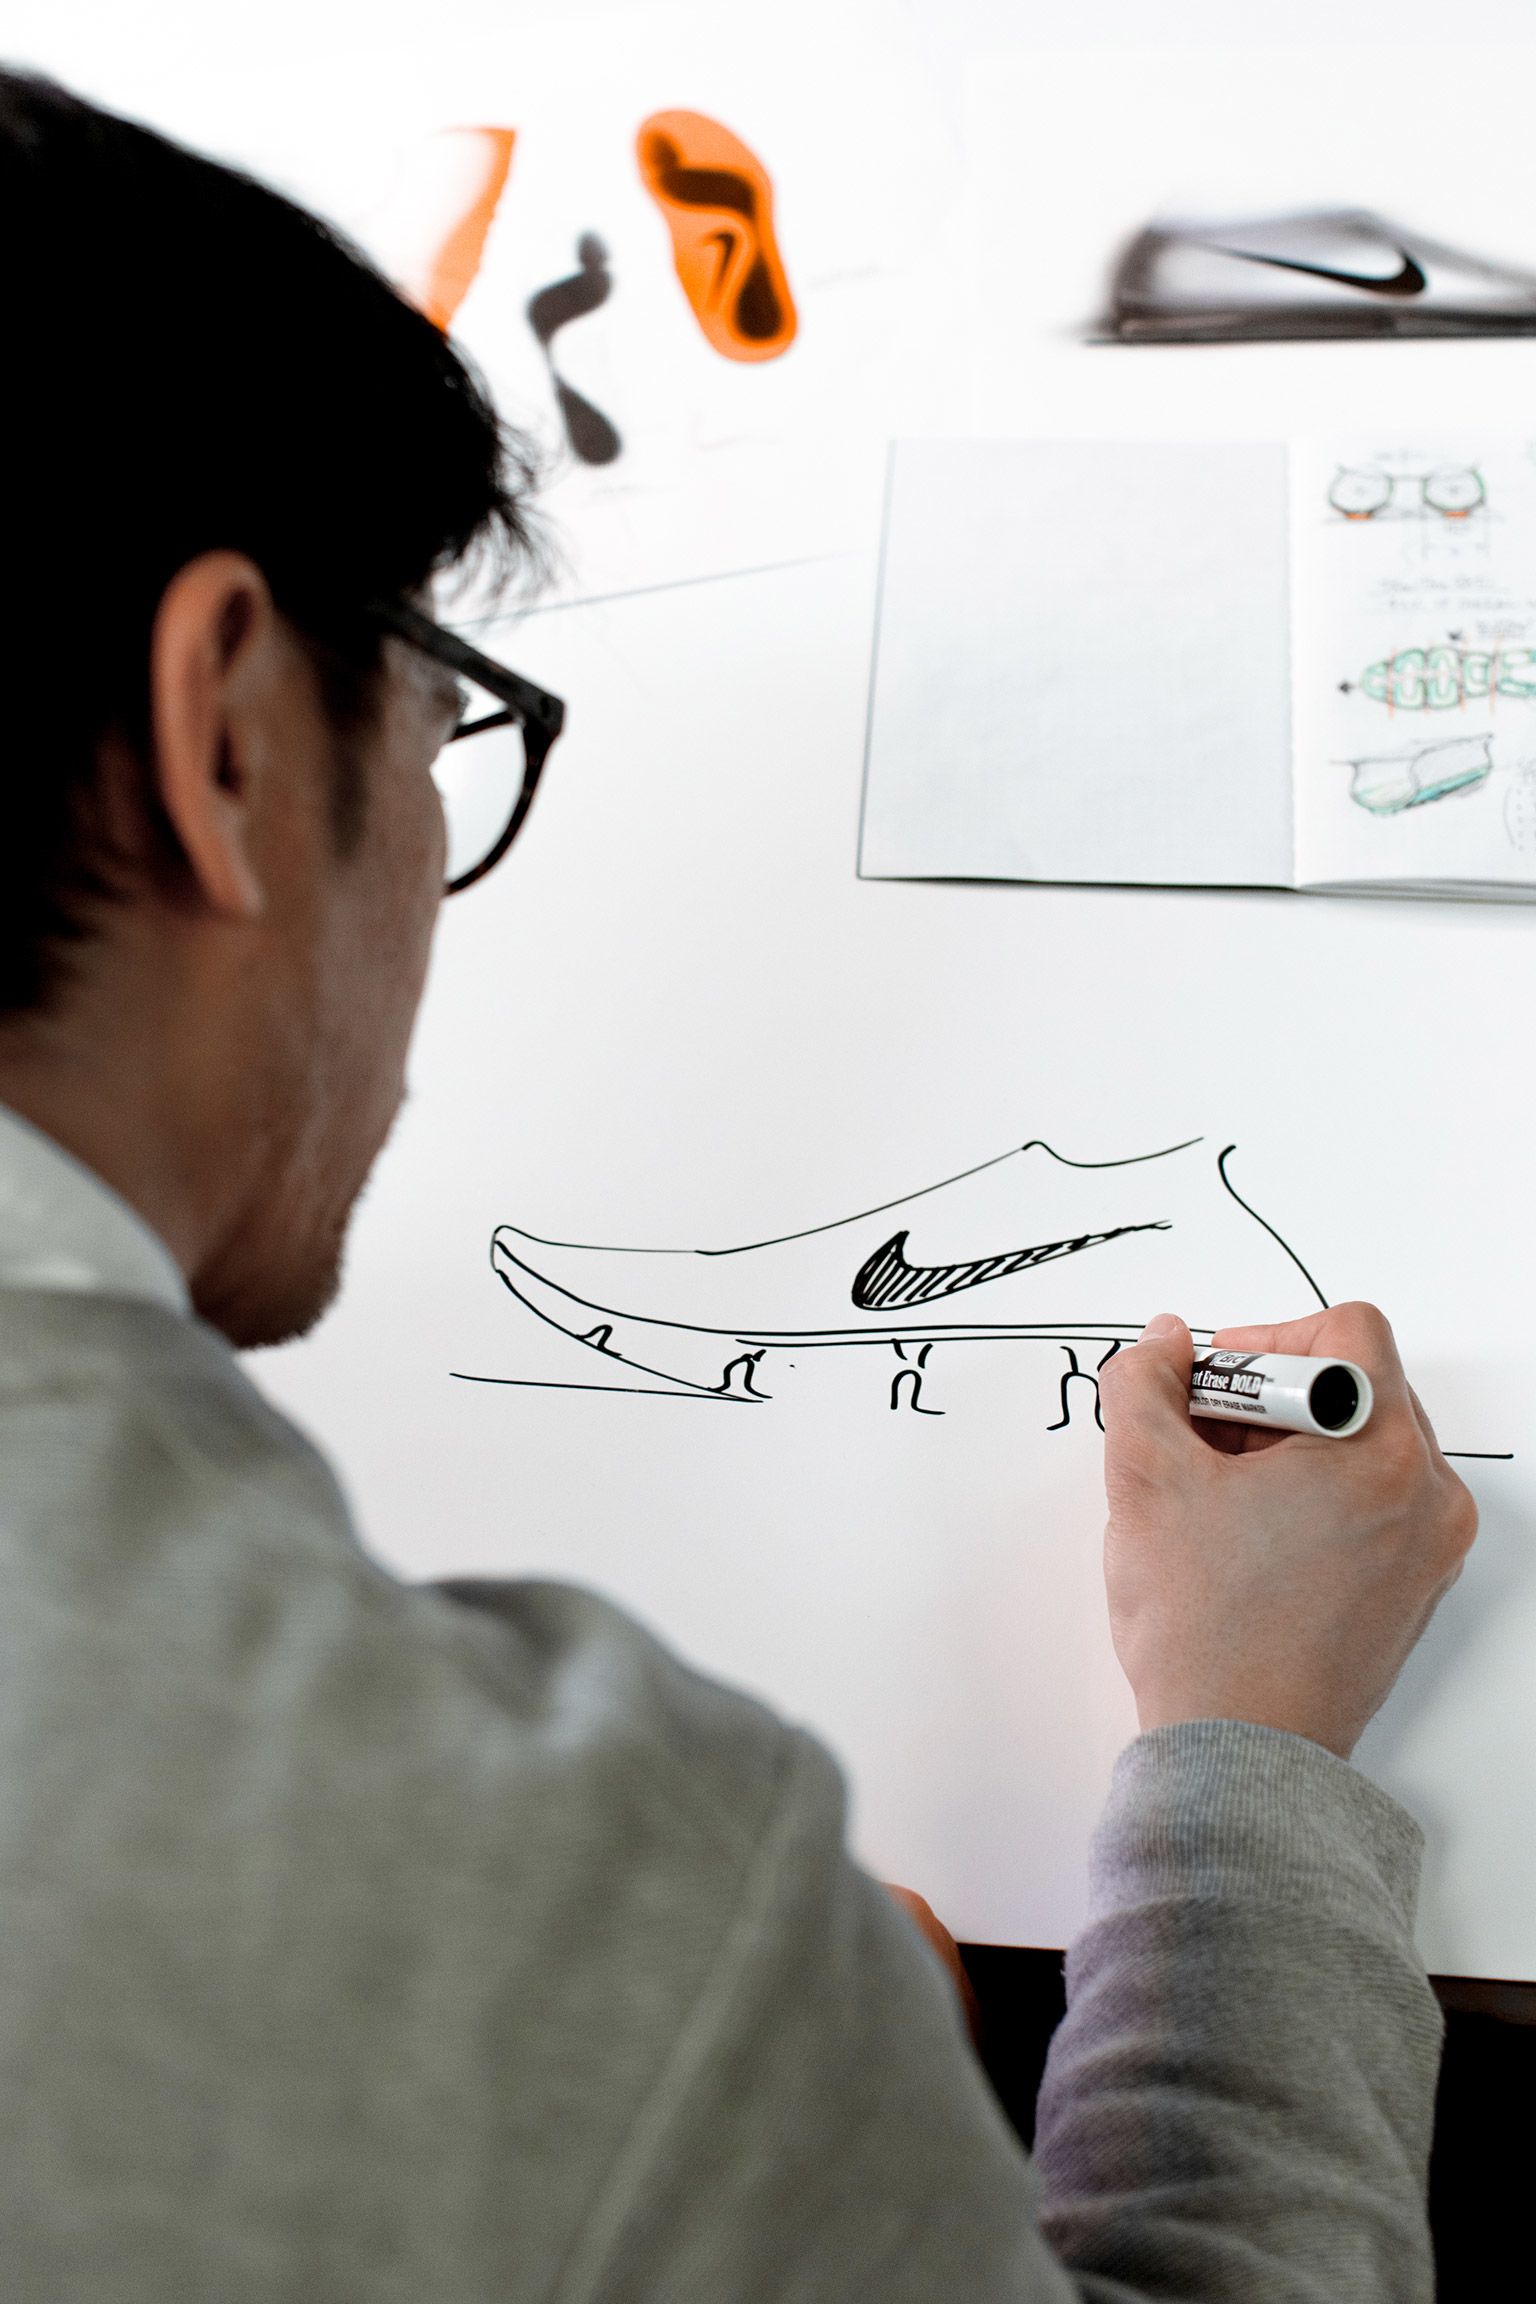 Behind the Design: Nike Air Vapormax 